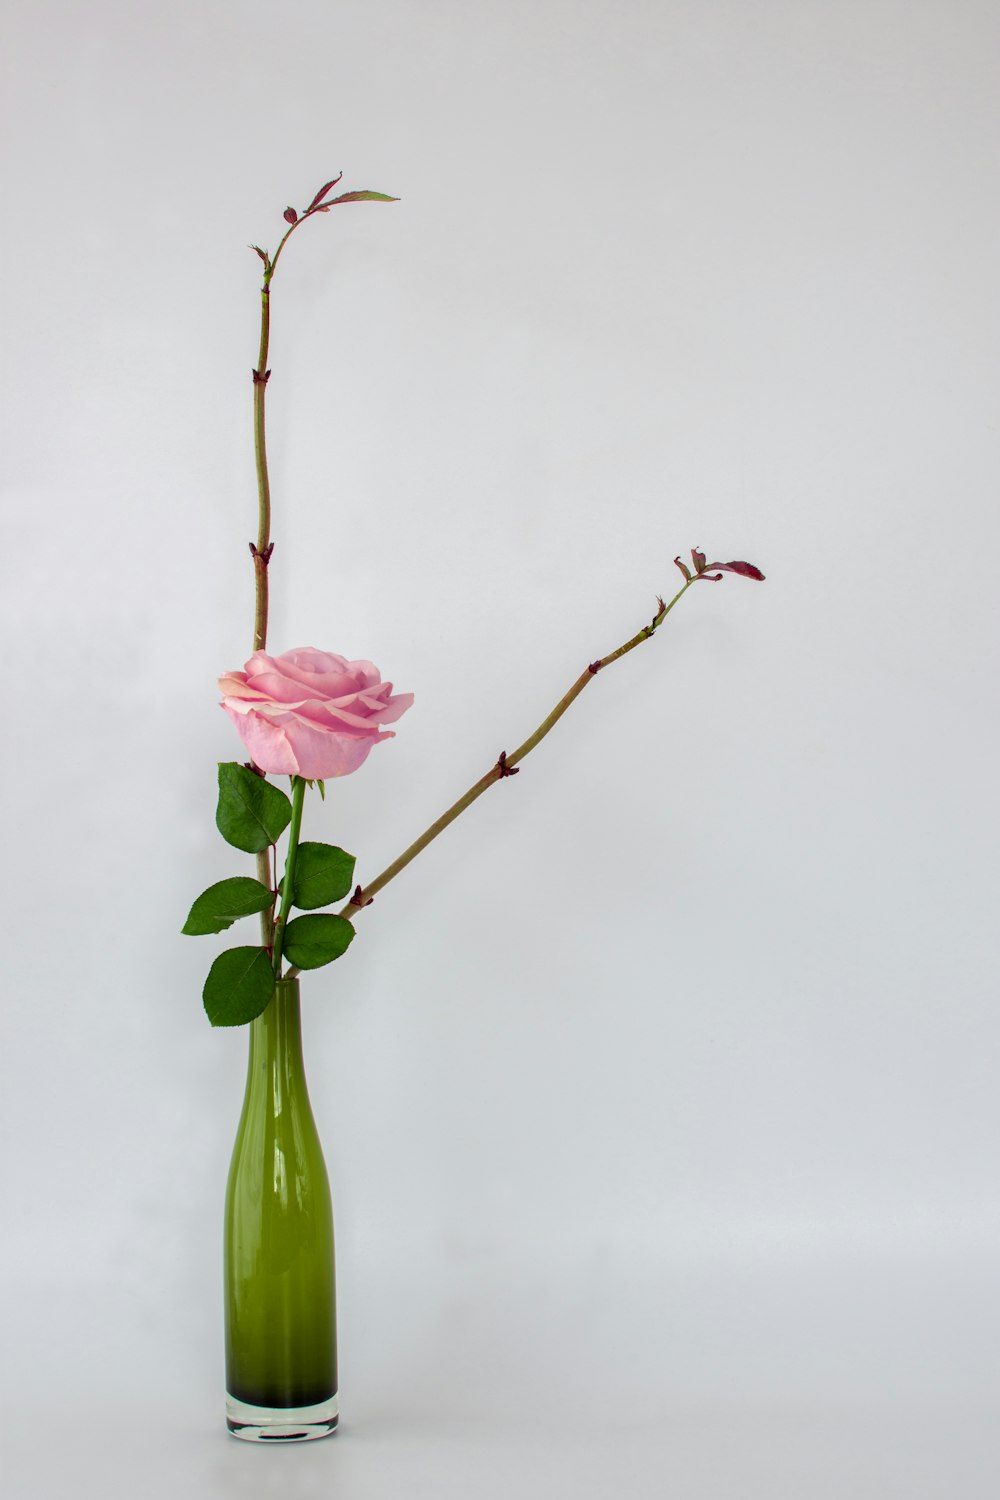 pink flower in green glass vase